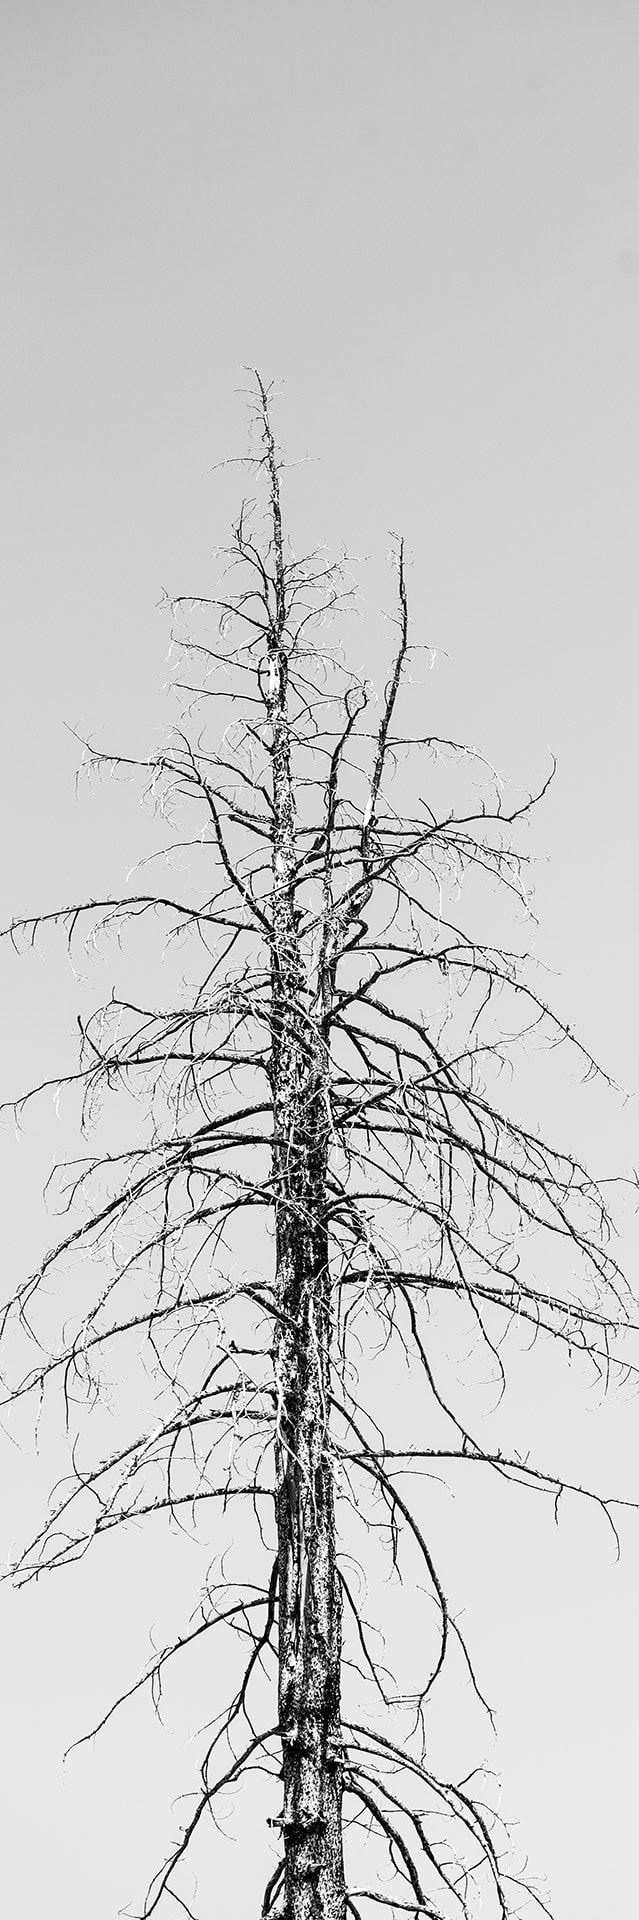 artnorama - Dead Tree